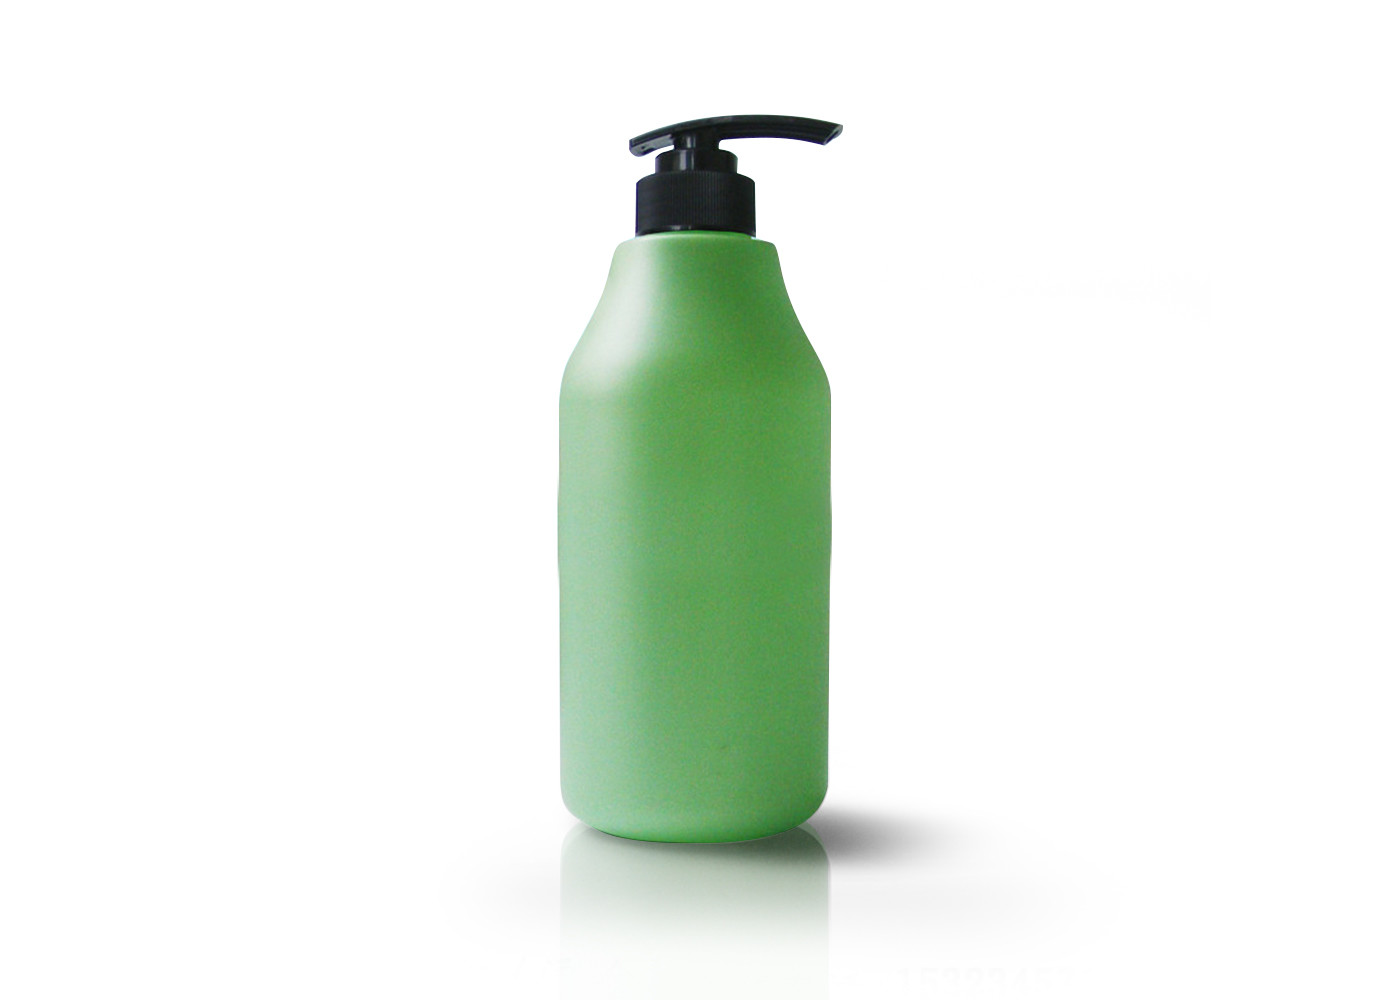  HDPE Empty Plastic Bottles / Green 500ml Plastic Bottle With Pump Dispenser Manufactures